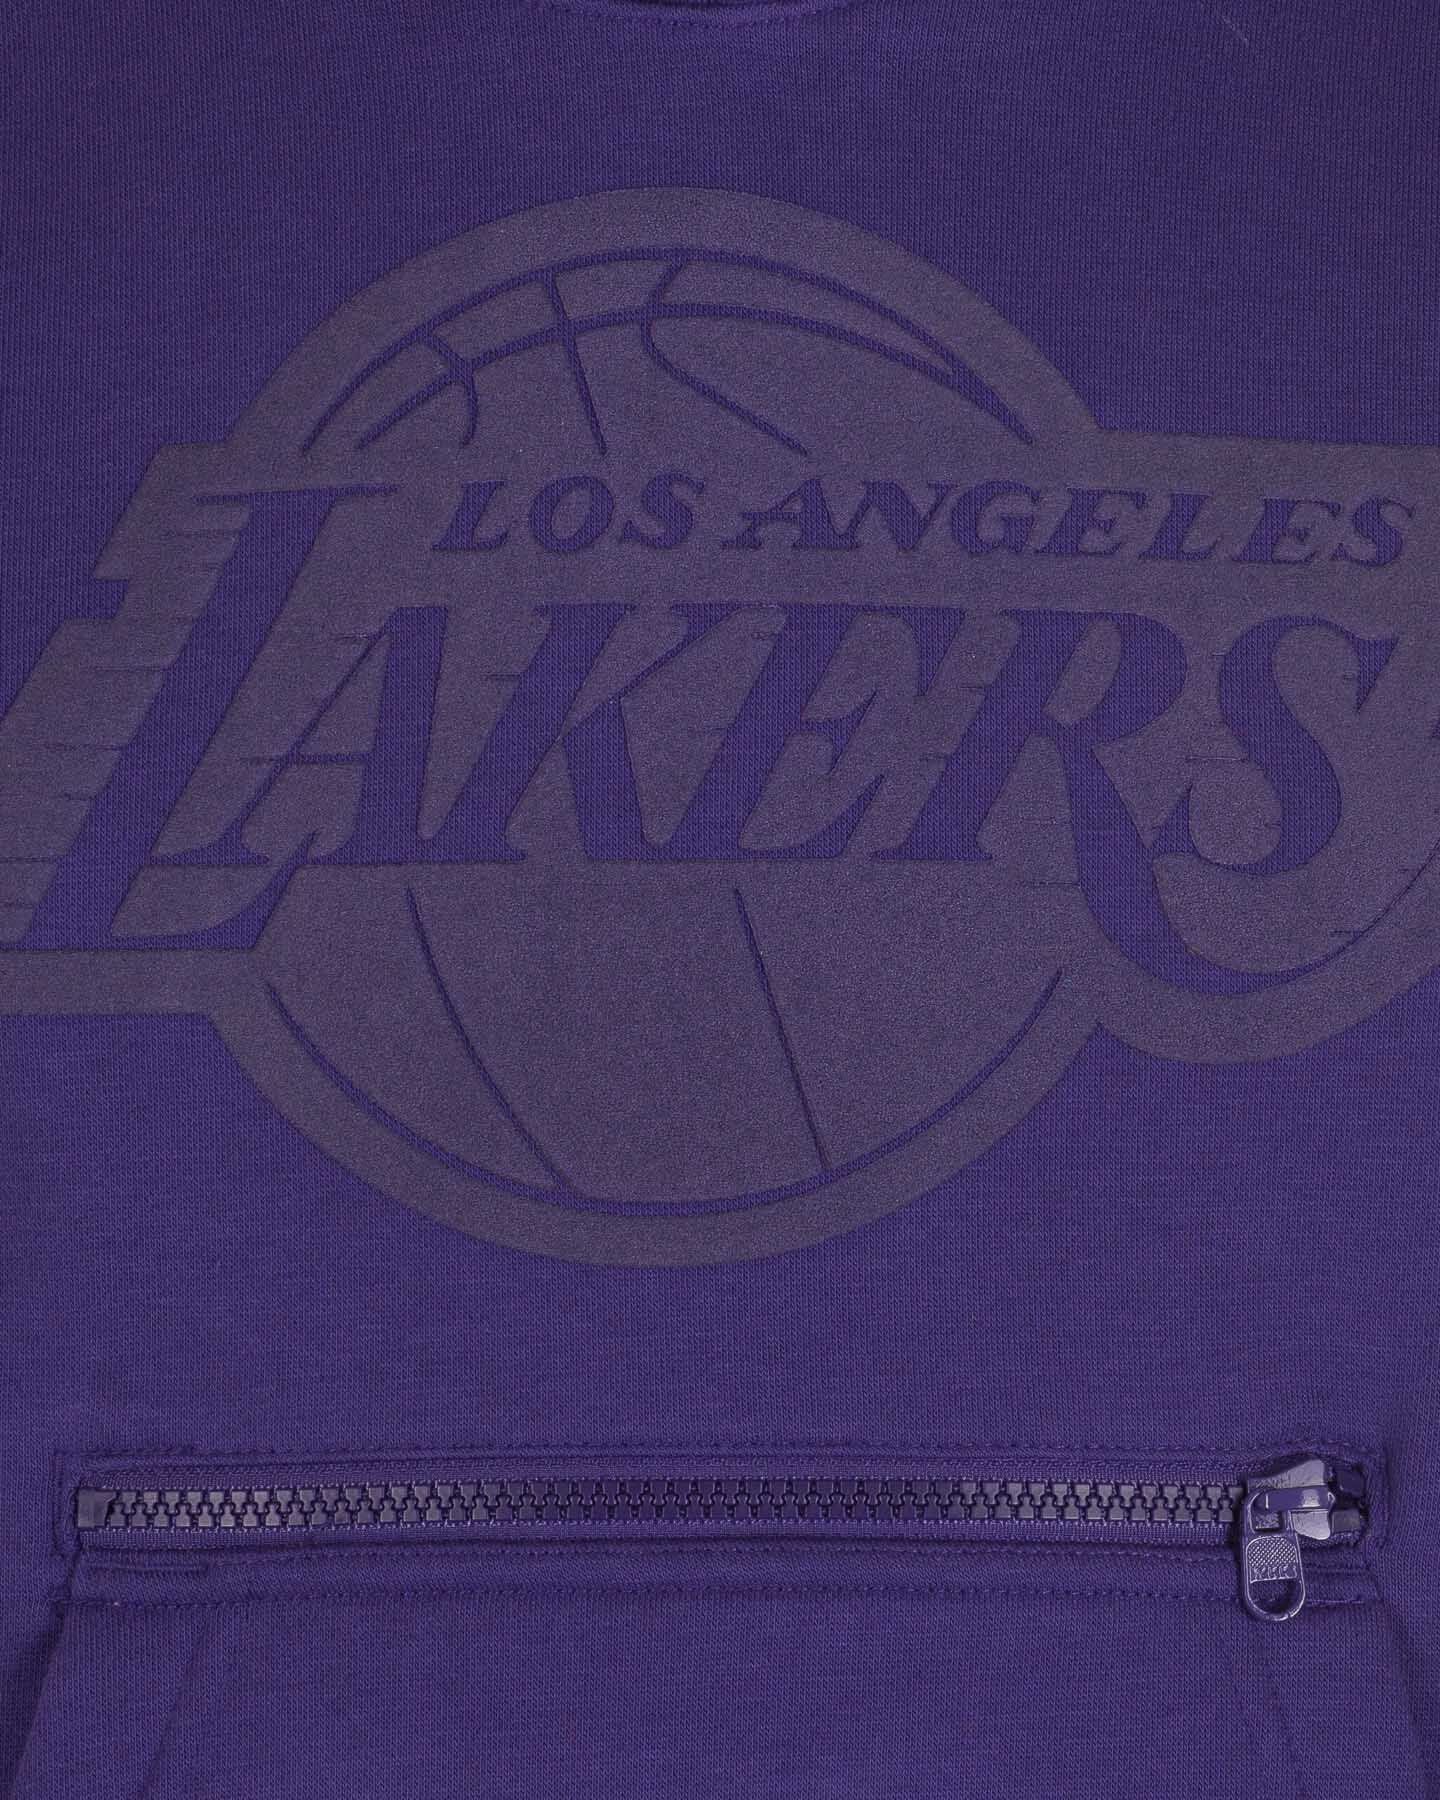  Abbigliamento basket NIKE NBA STATEMENT LOS ANGELES LAKERS JR S4094750|000|S scatto 2